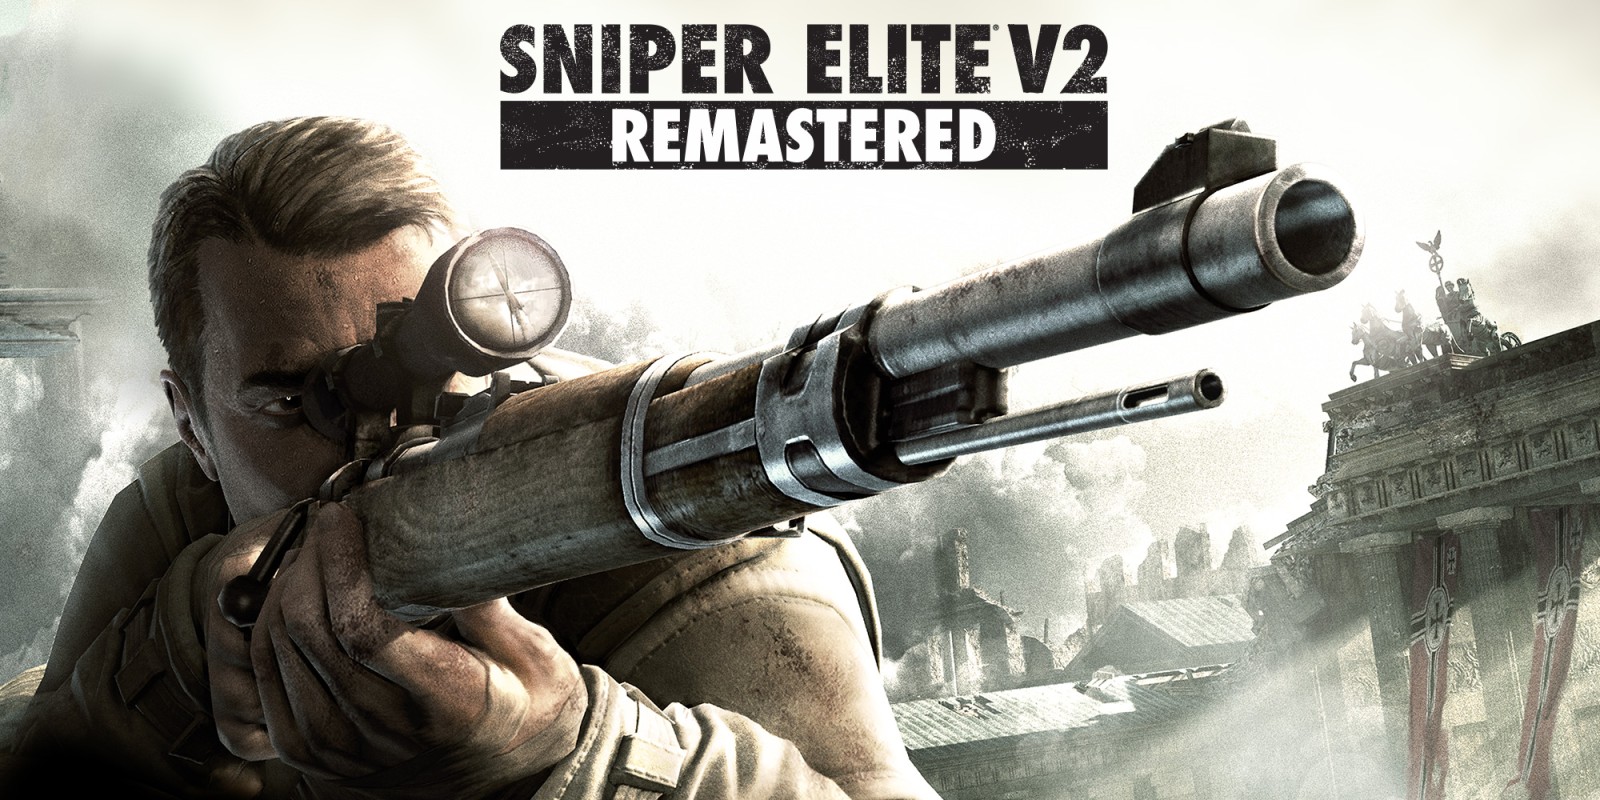 sniper elite 5 switch download free